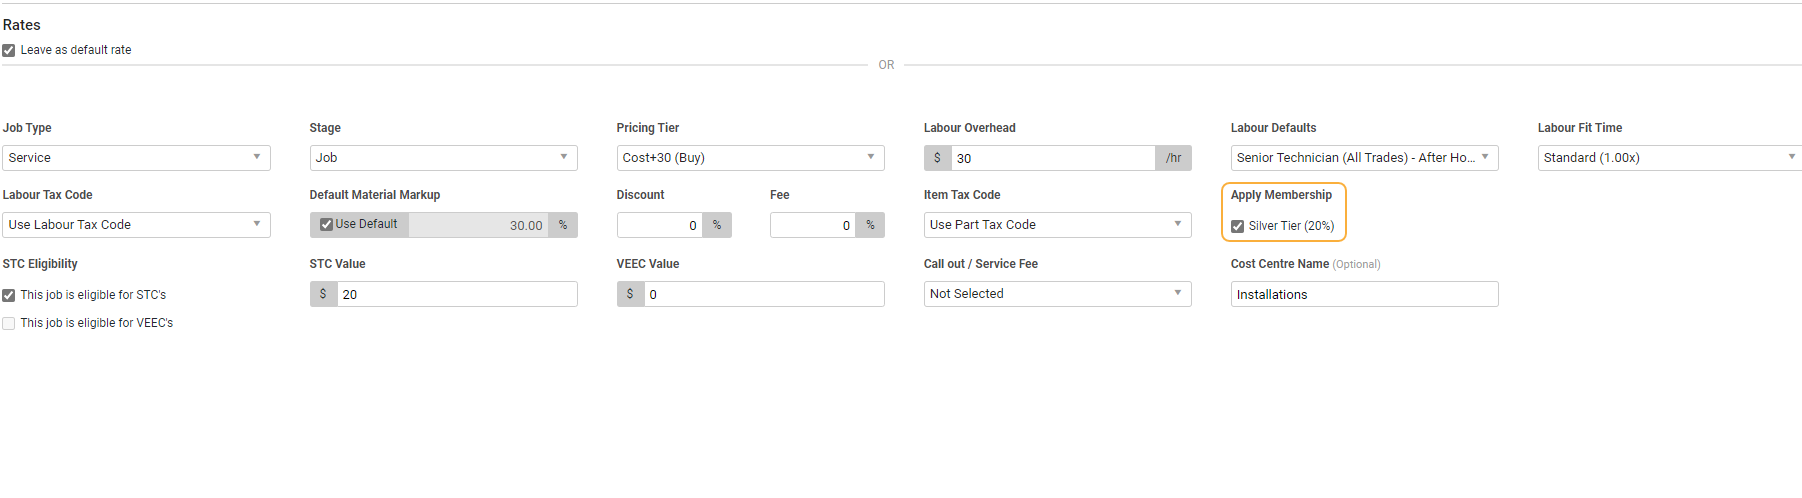 A screenshot of the Apply Membership check box in the job Optional tab.